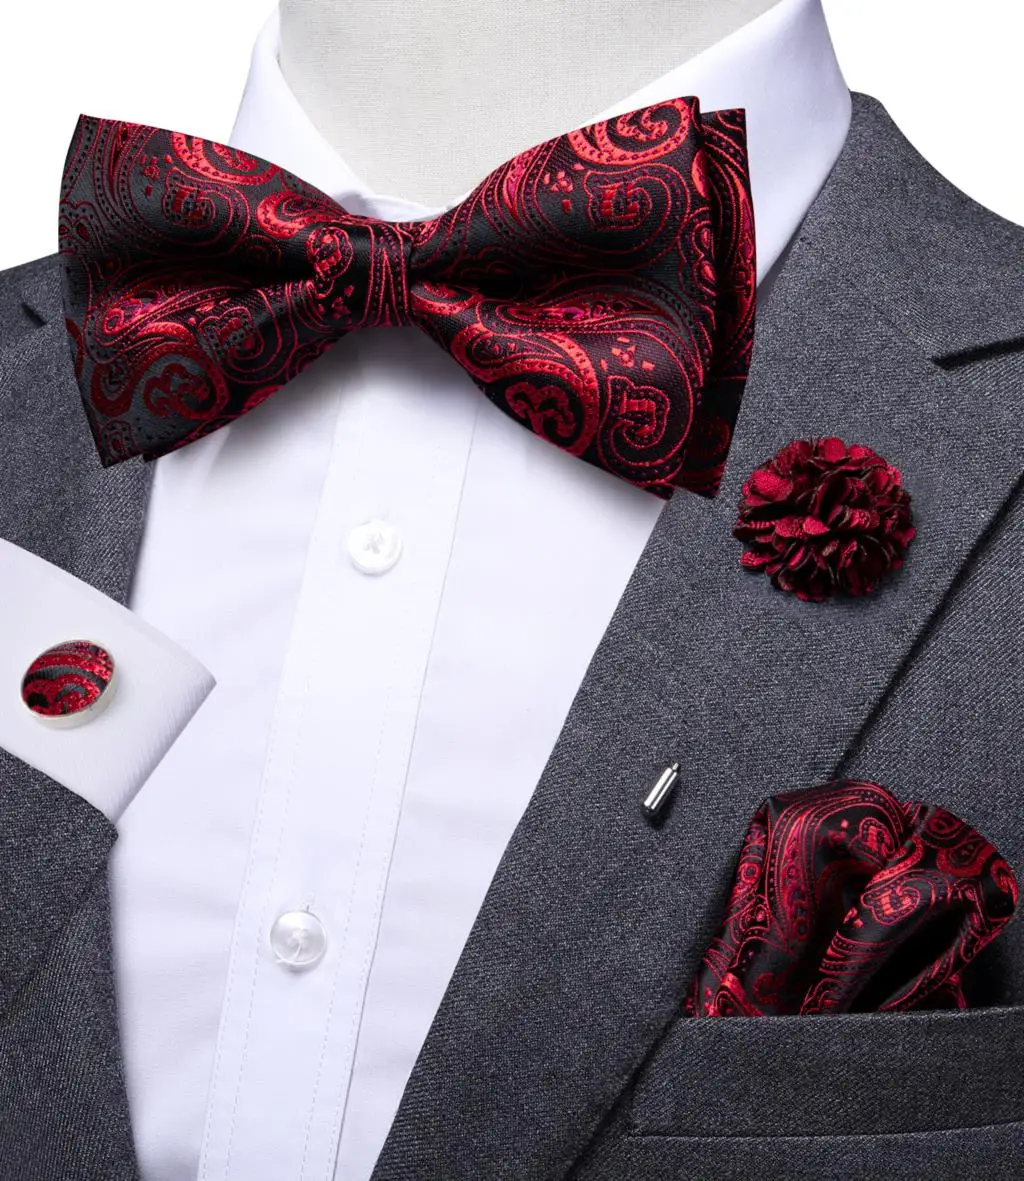 Hi-Tie Luxury Red Burgundy Silk Men's Bowtie Pocket Square Cufflinks Brooch Set Butterfly Knot Bow Tie for Men Wedding Groomsman